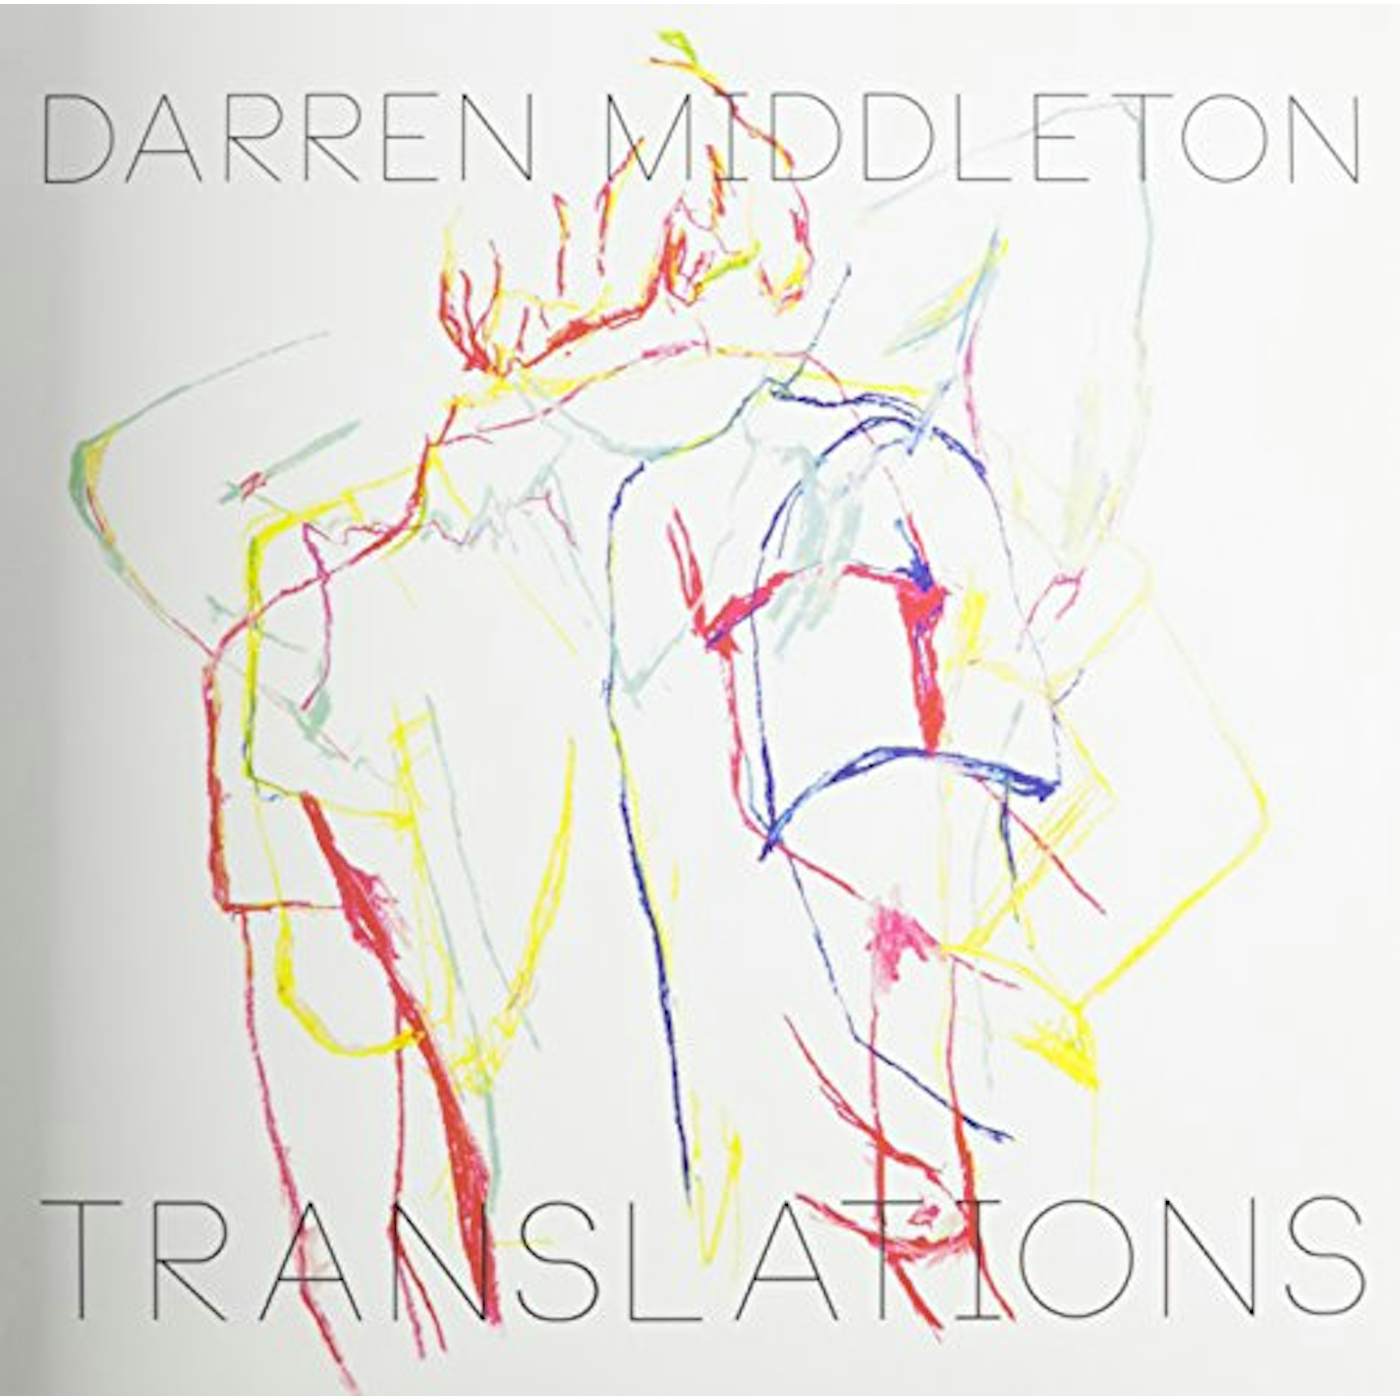 Darren Middleton Translations Vinyl Record